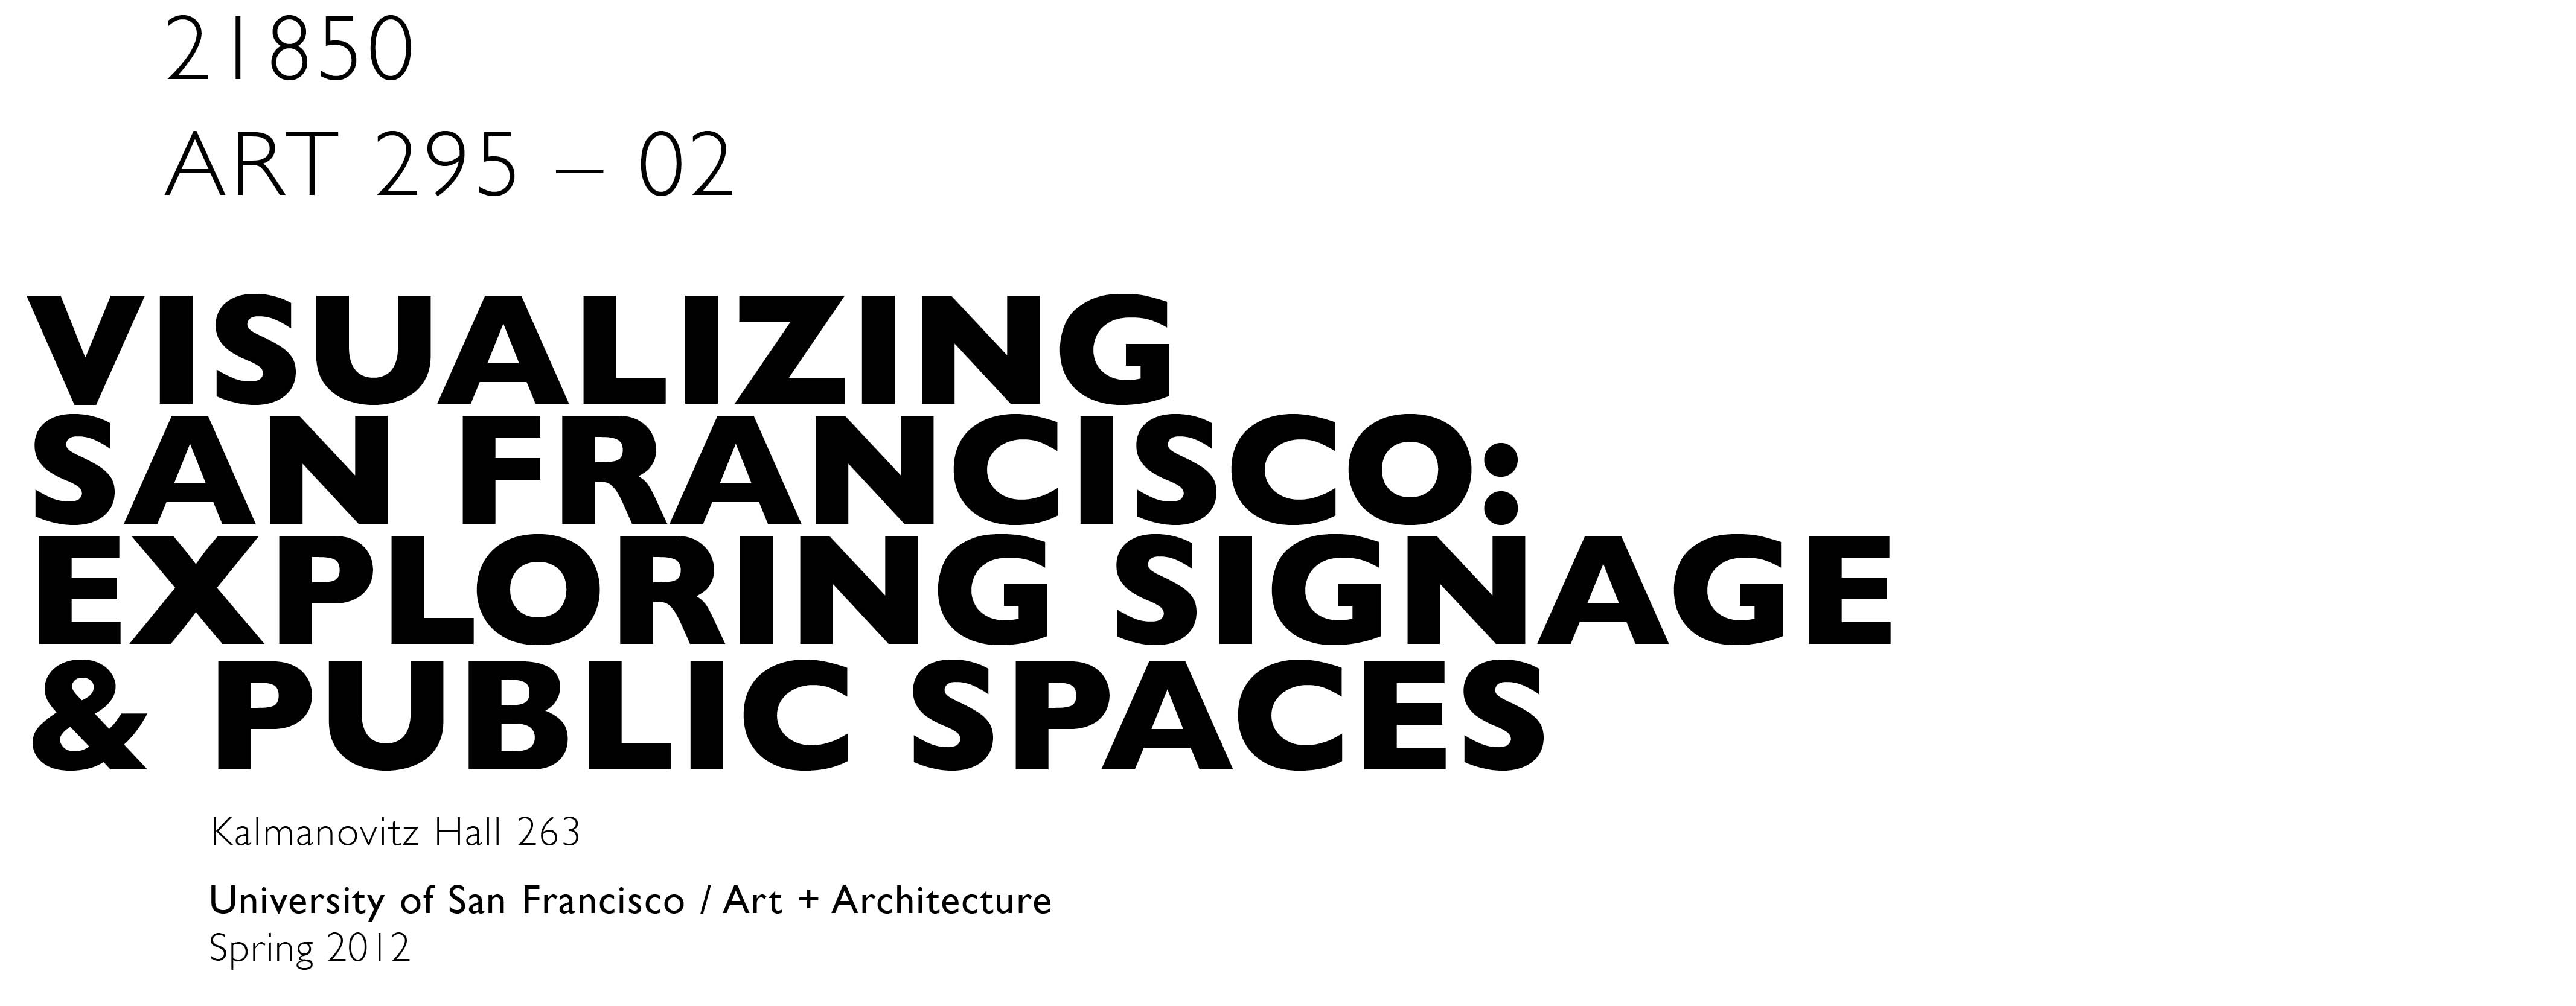 Visualizing San Francisco / Exploring Signage & Public Spaces